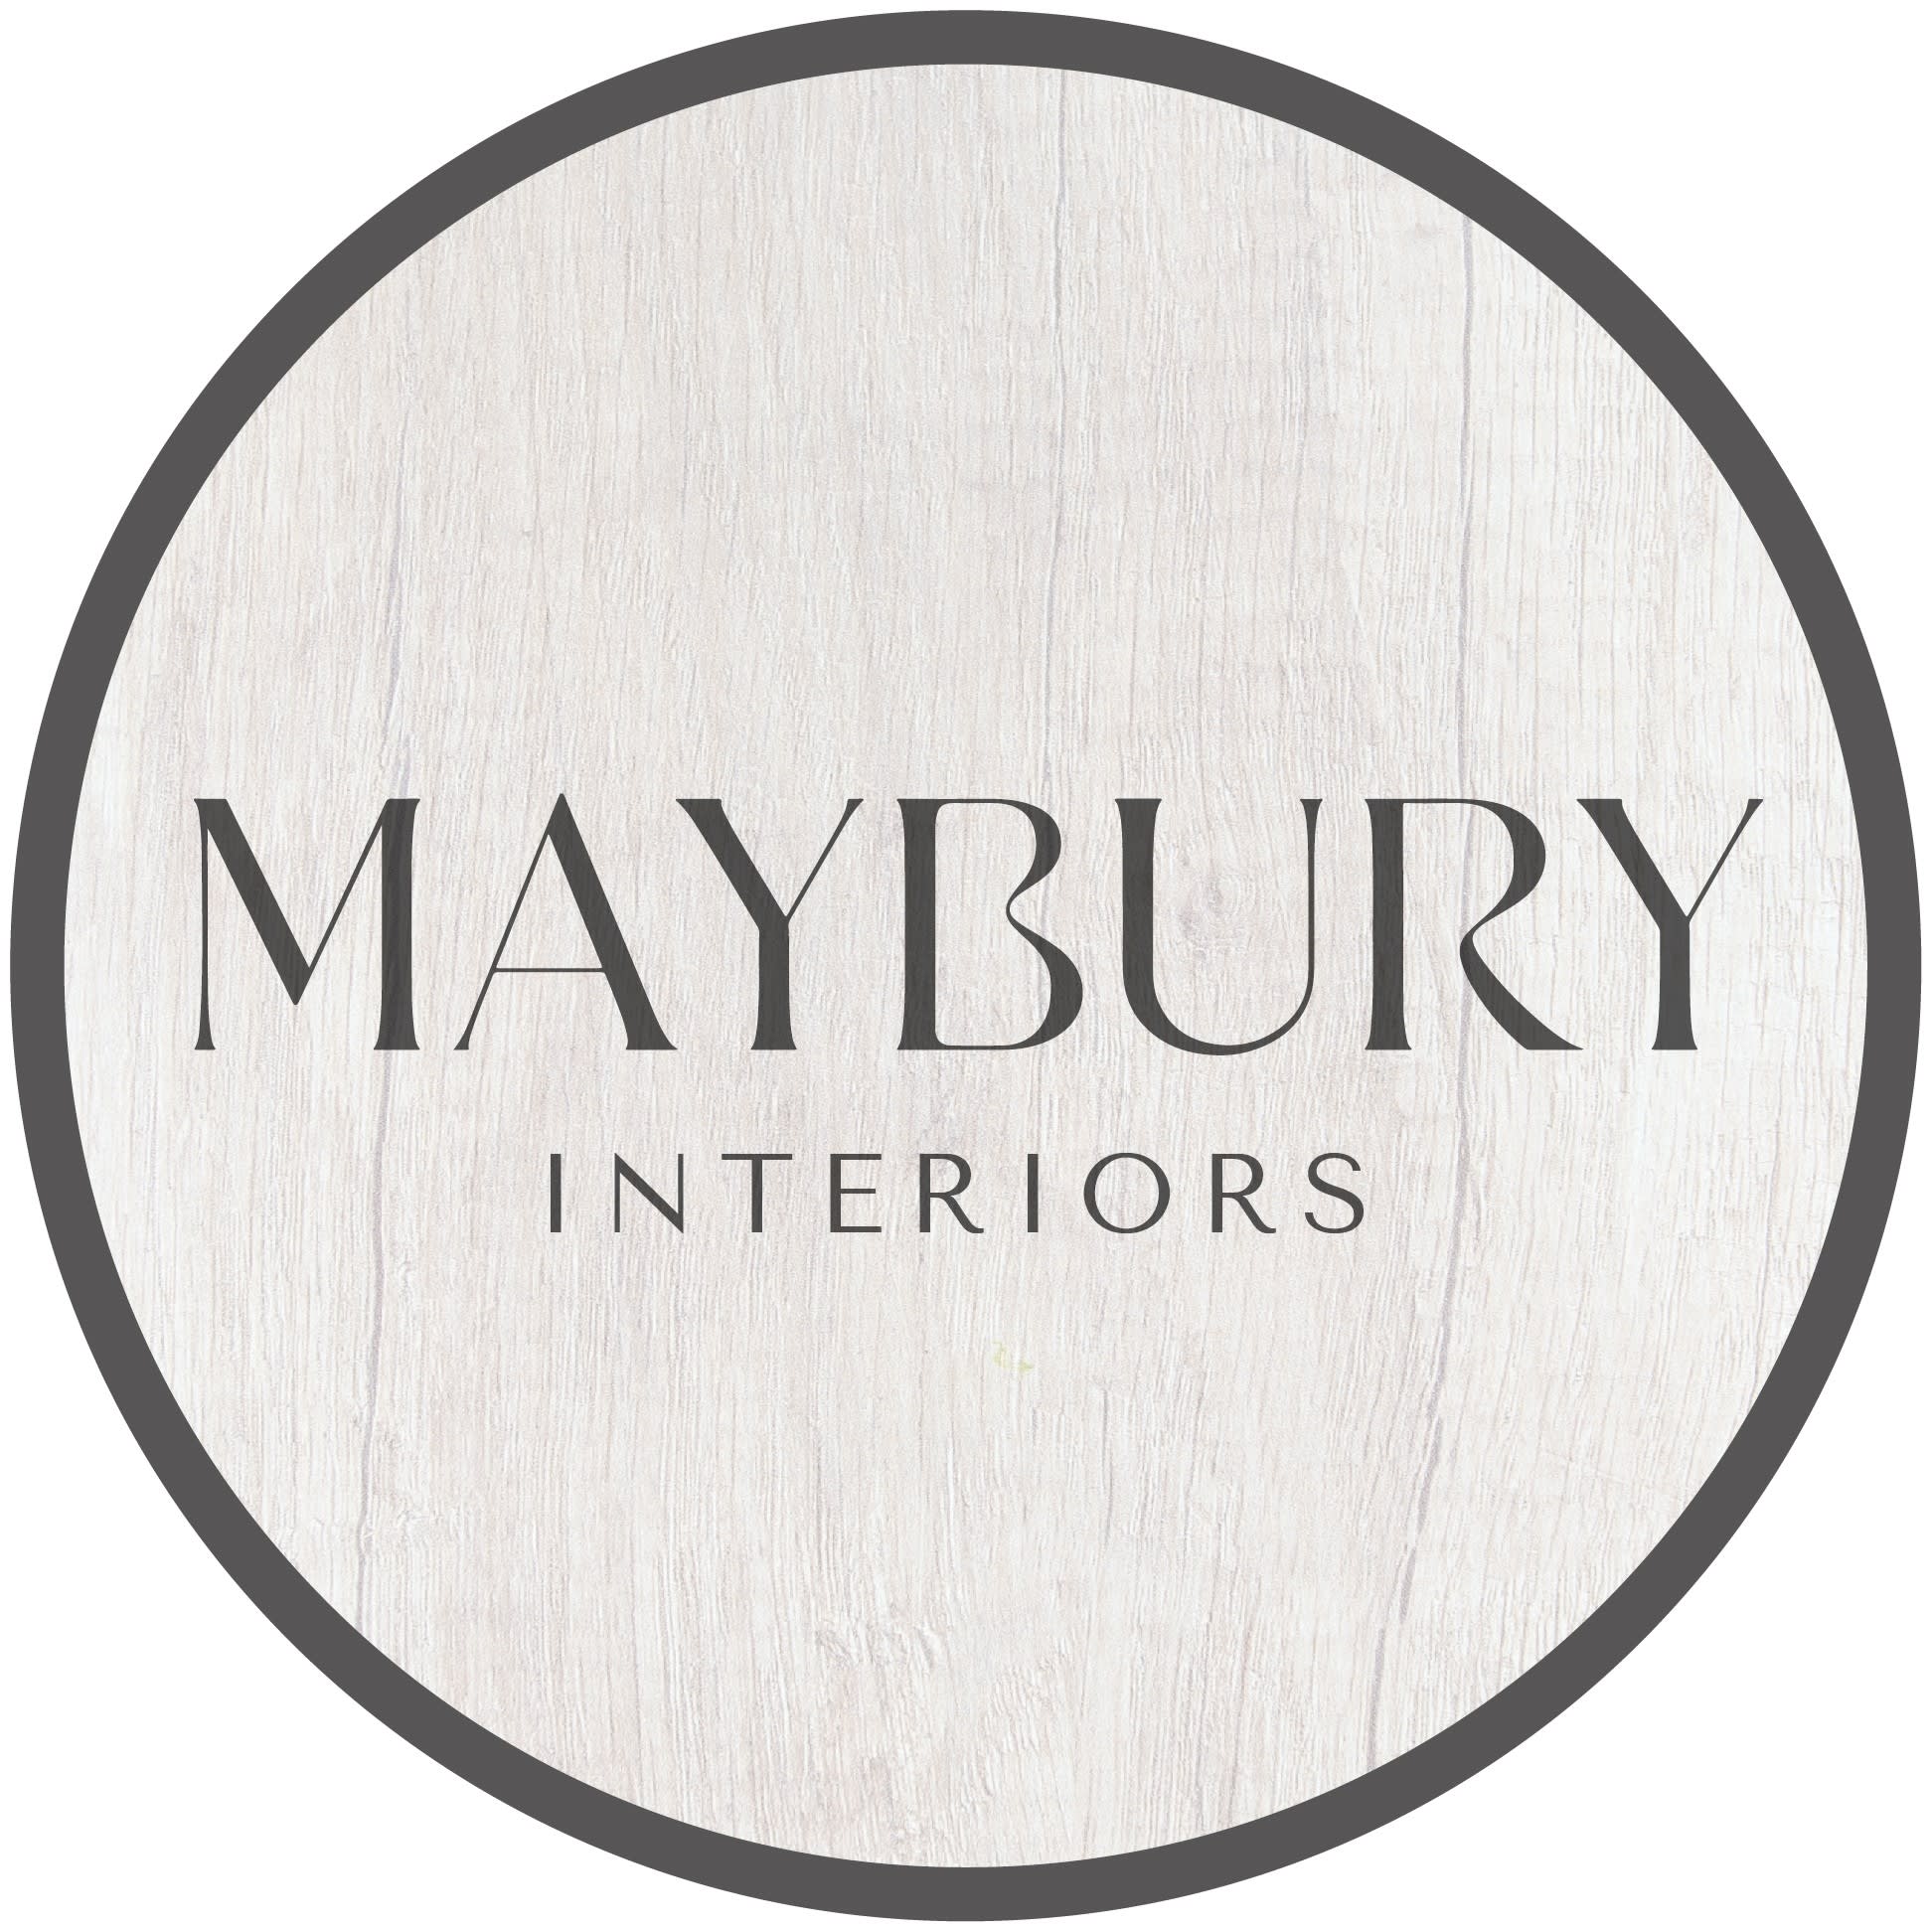 Images Maybury Interiors Ltd